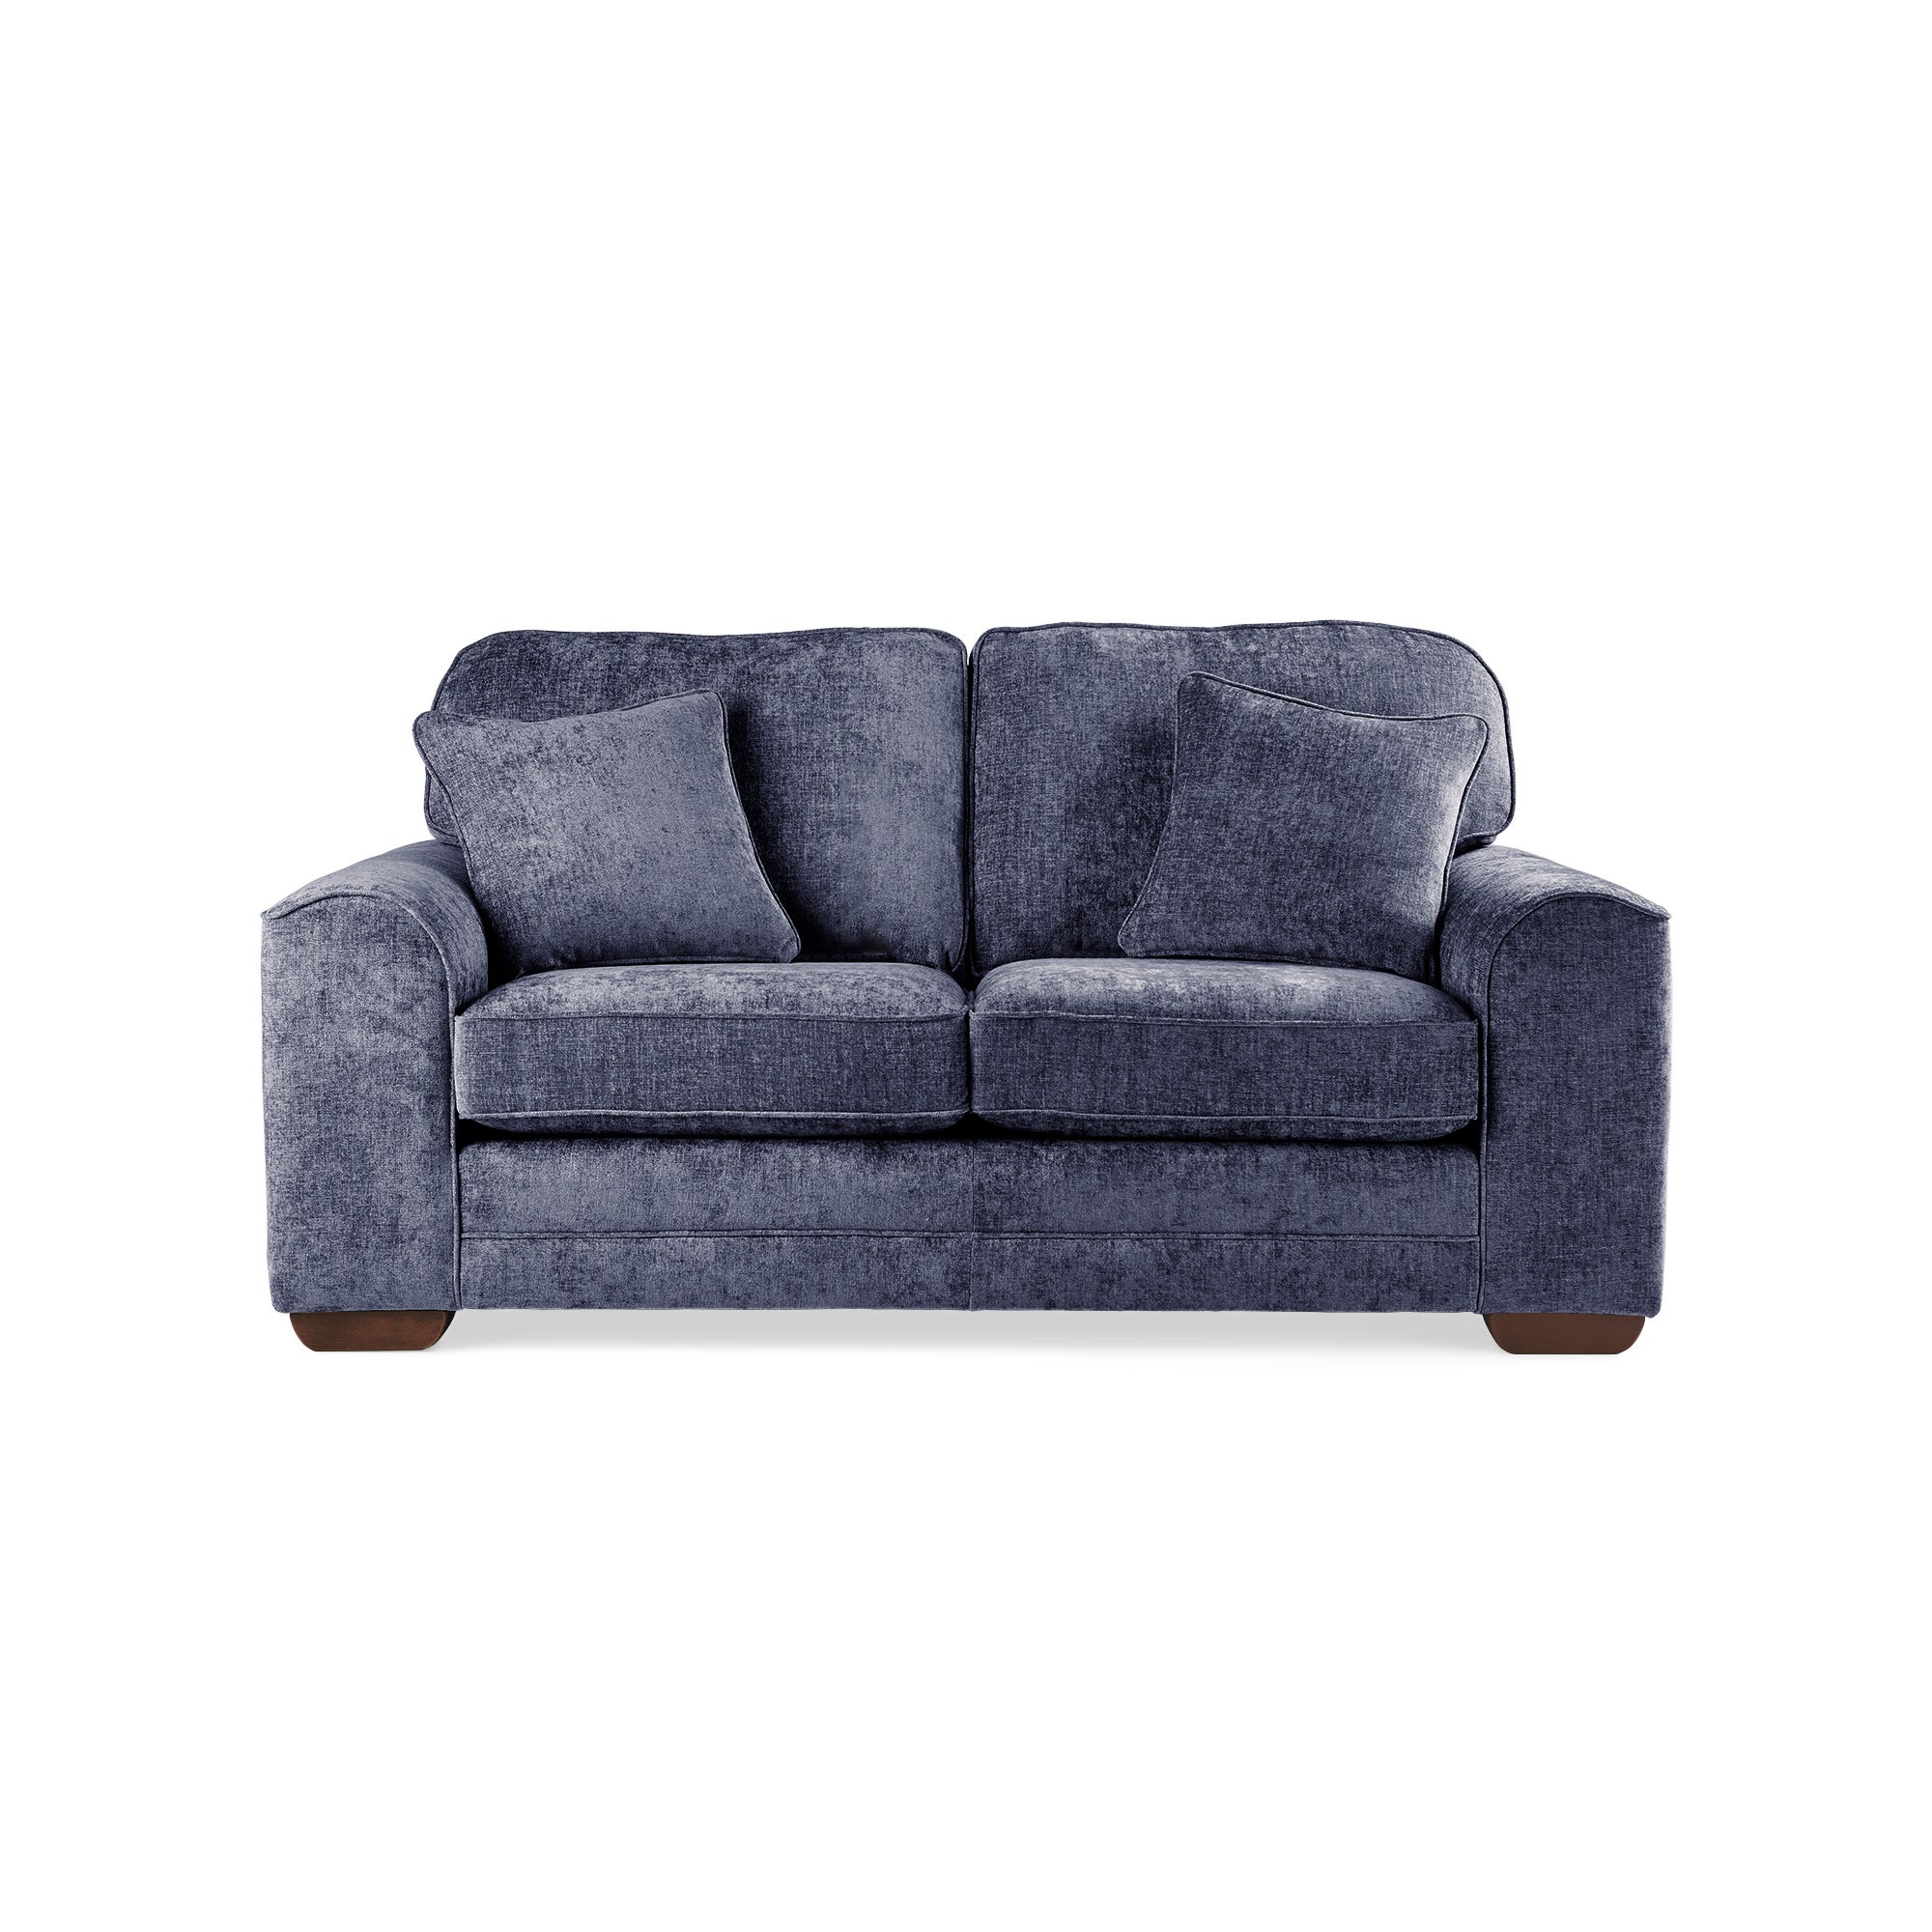 Morello 2 Seater Sofa Vintage Chenille Navy Blue